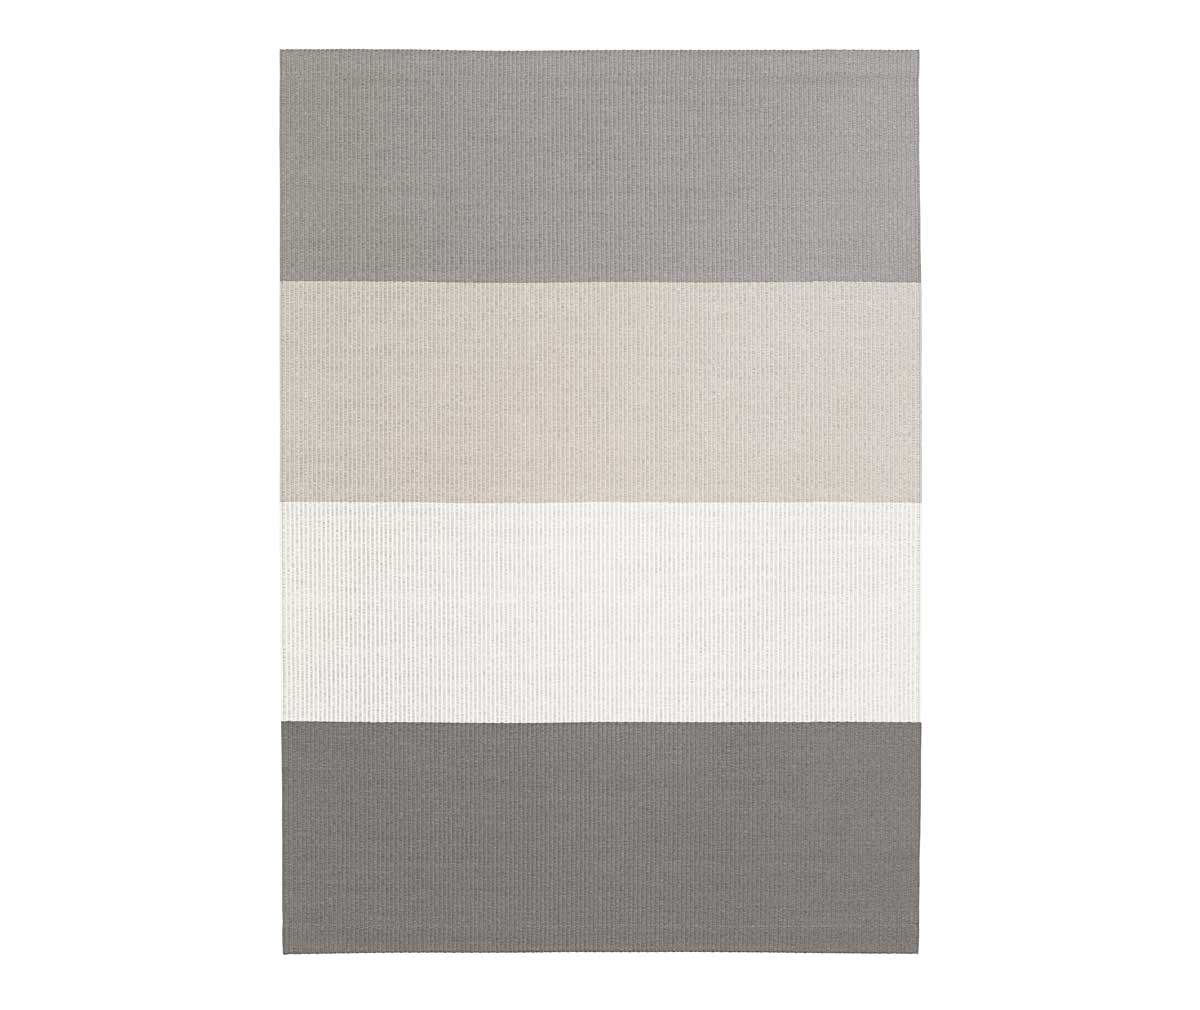 Woodnotes Fourways Rug Light Grey/White, 170 x 240 cm